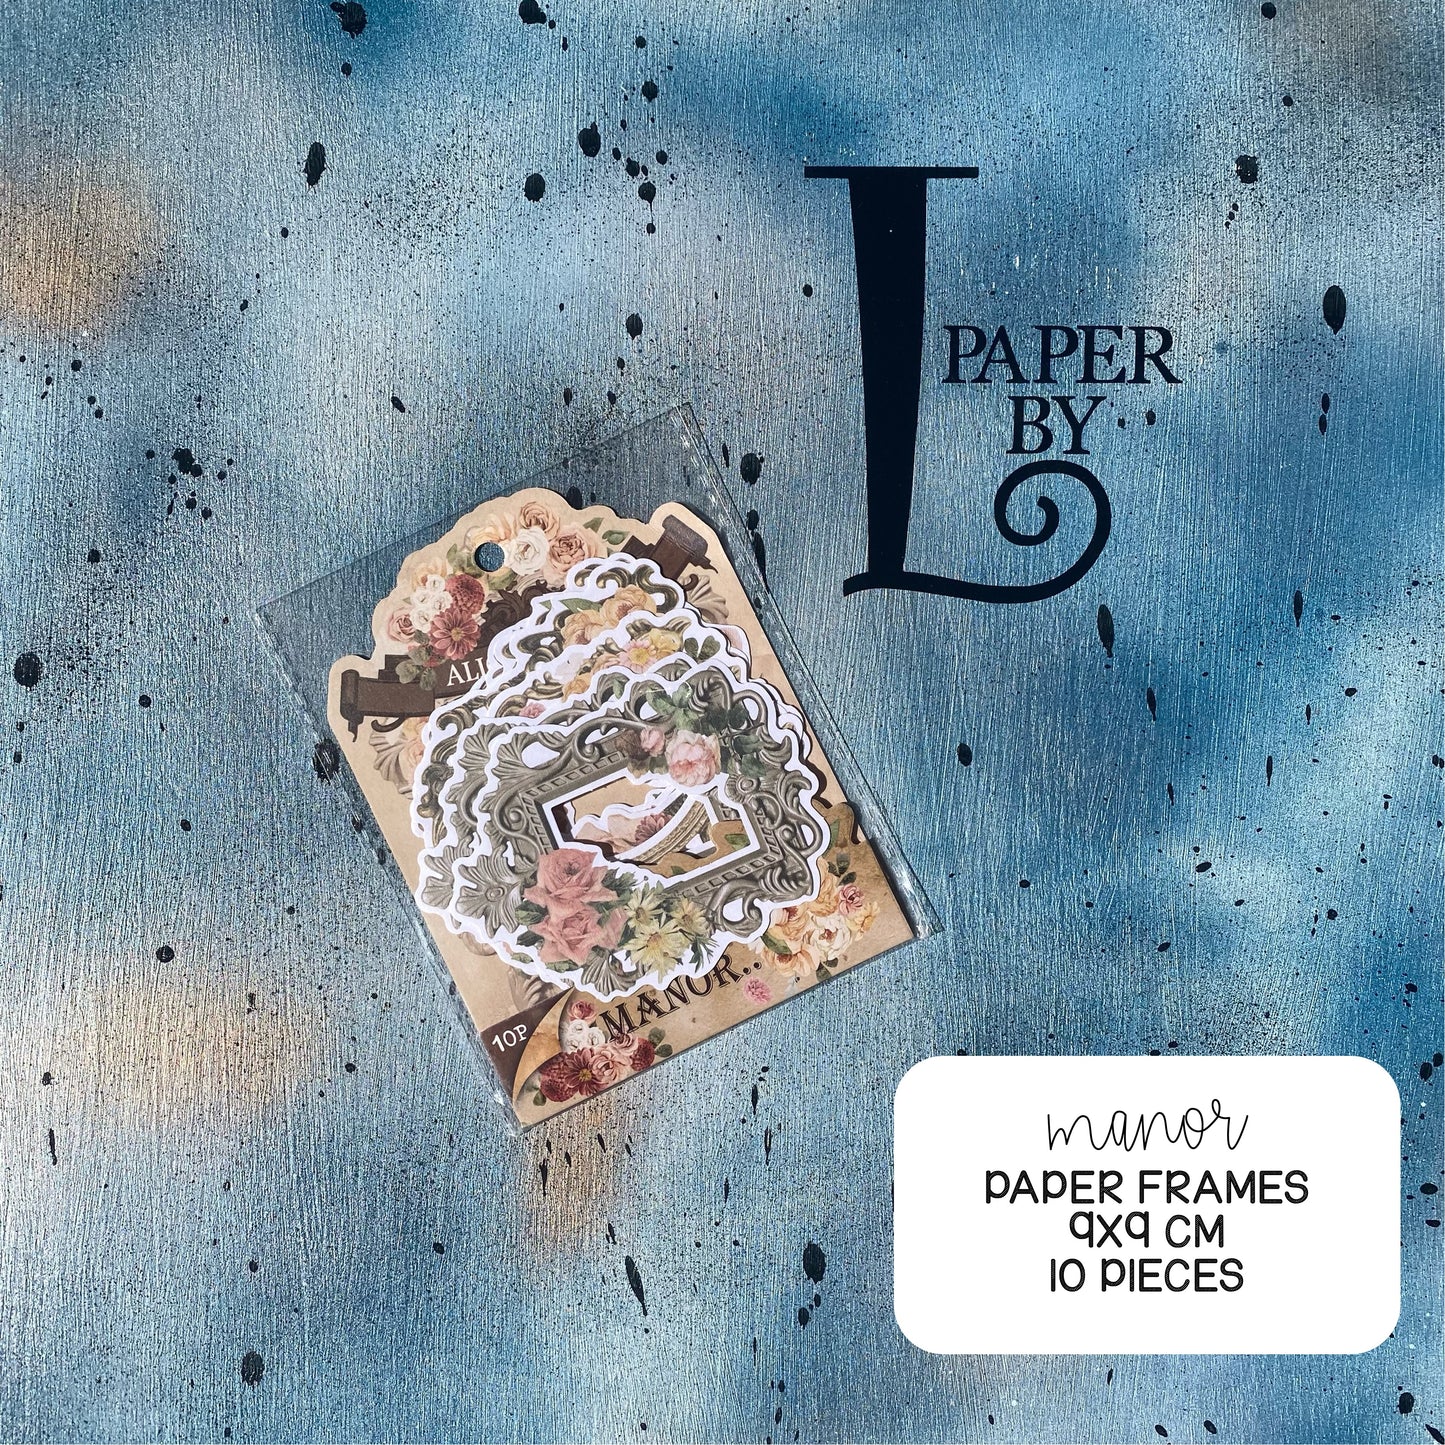 Paper Frames - Paper by L *